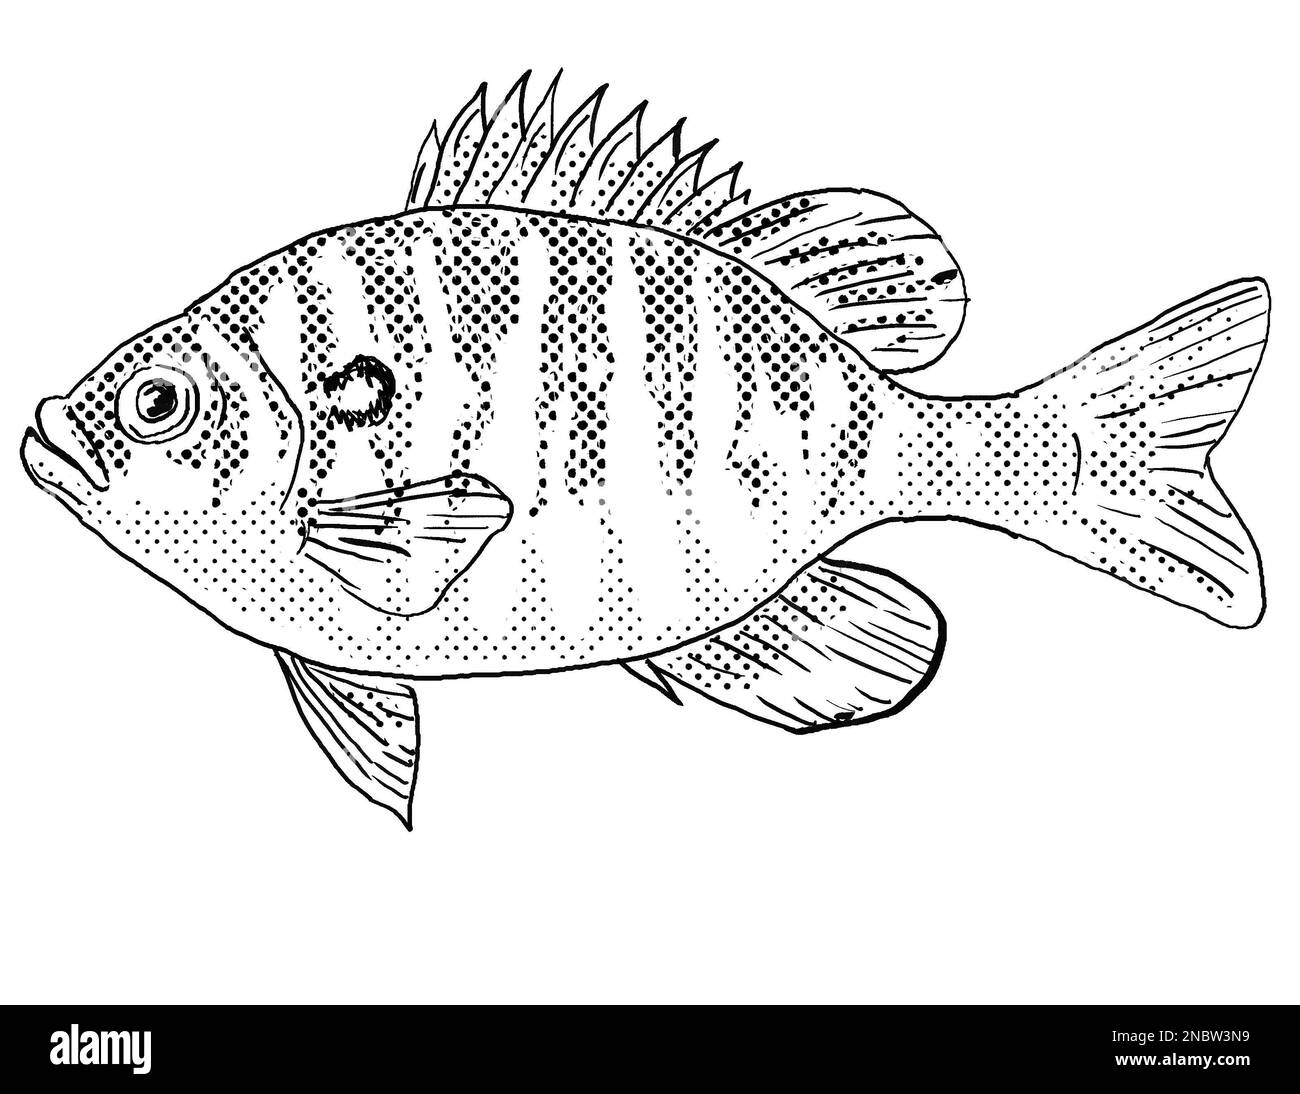 Dollar sunfish Black and White Stock Photos & Images - Alamy